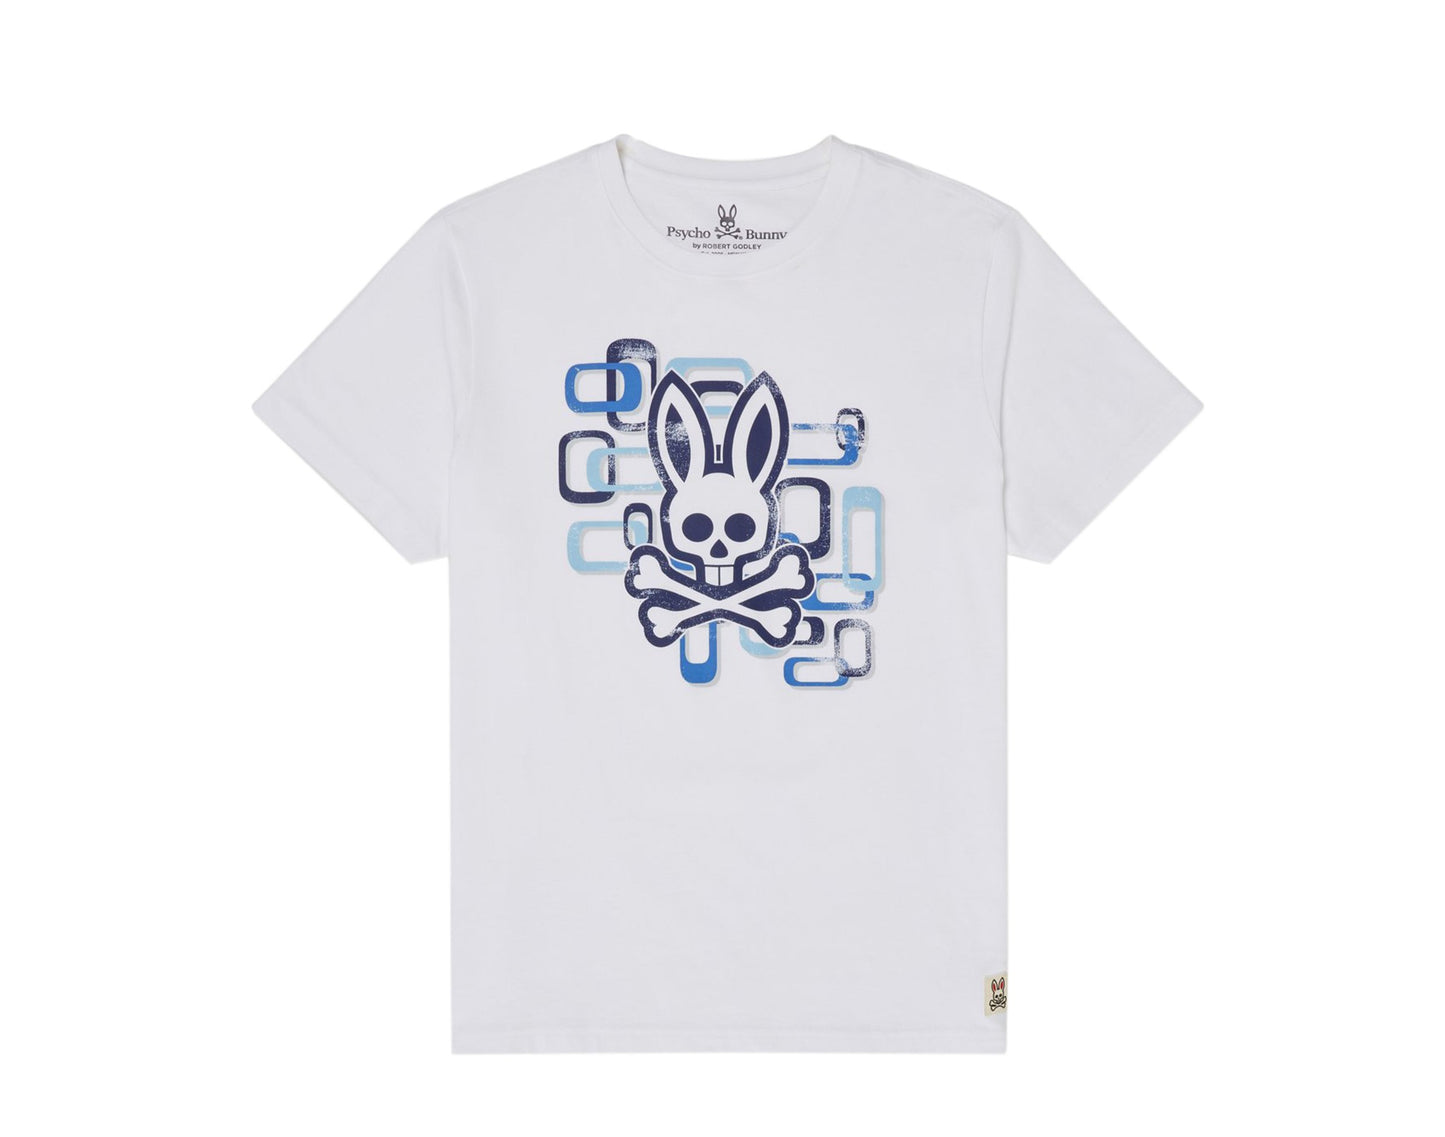 Psycho Bunny Dorset Graphic New White Men's Tee Shirt B6U646H1PC-WHT